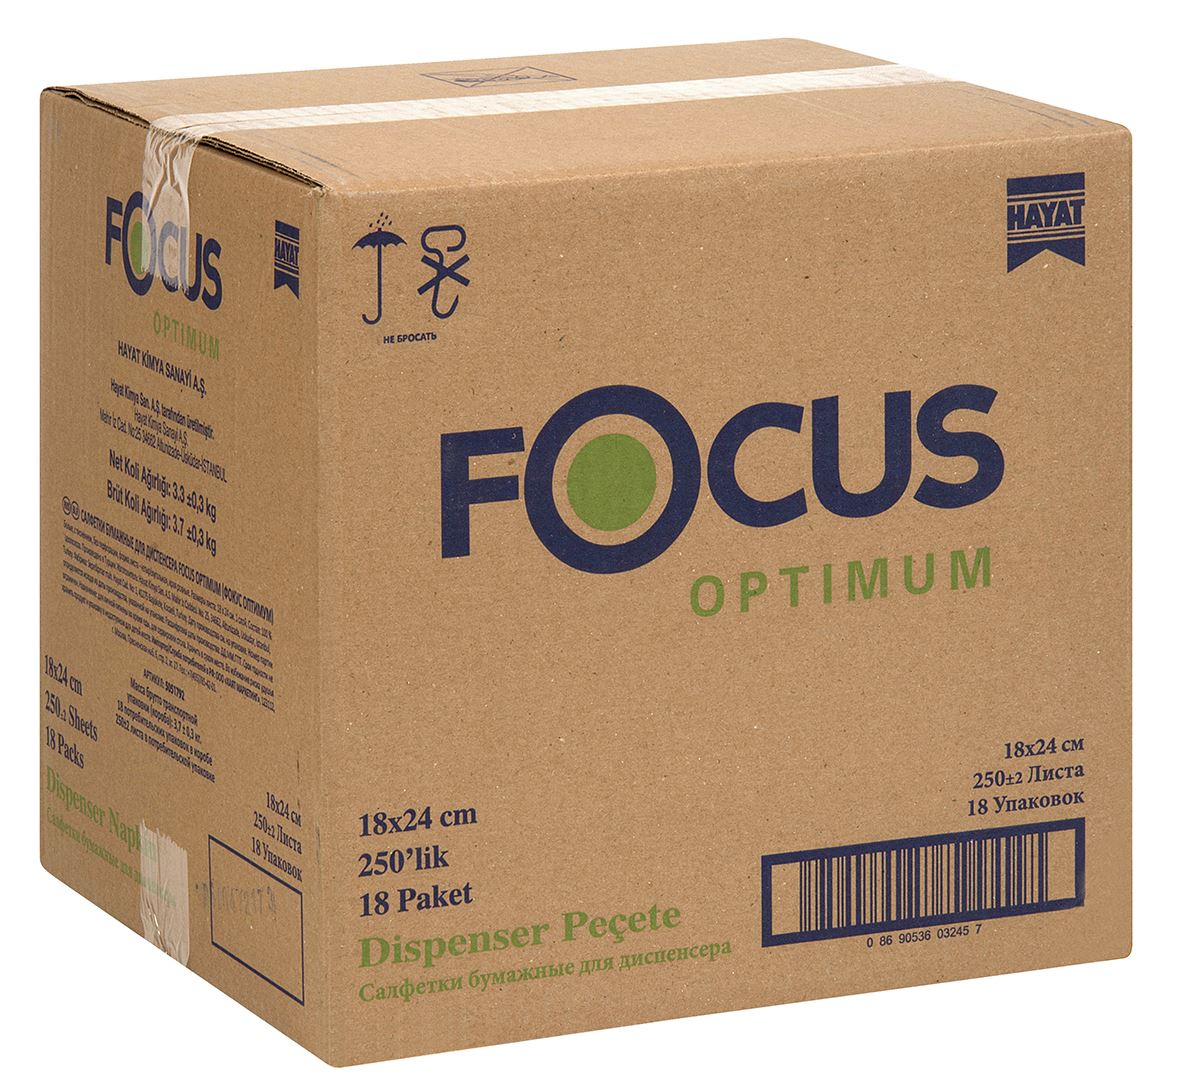 Focus Optimum Dispenser Peçete 250*18'Li Koli